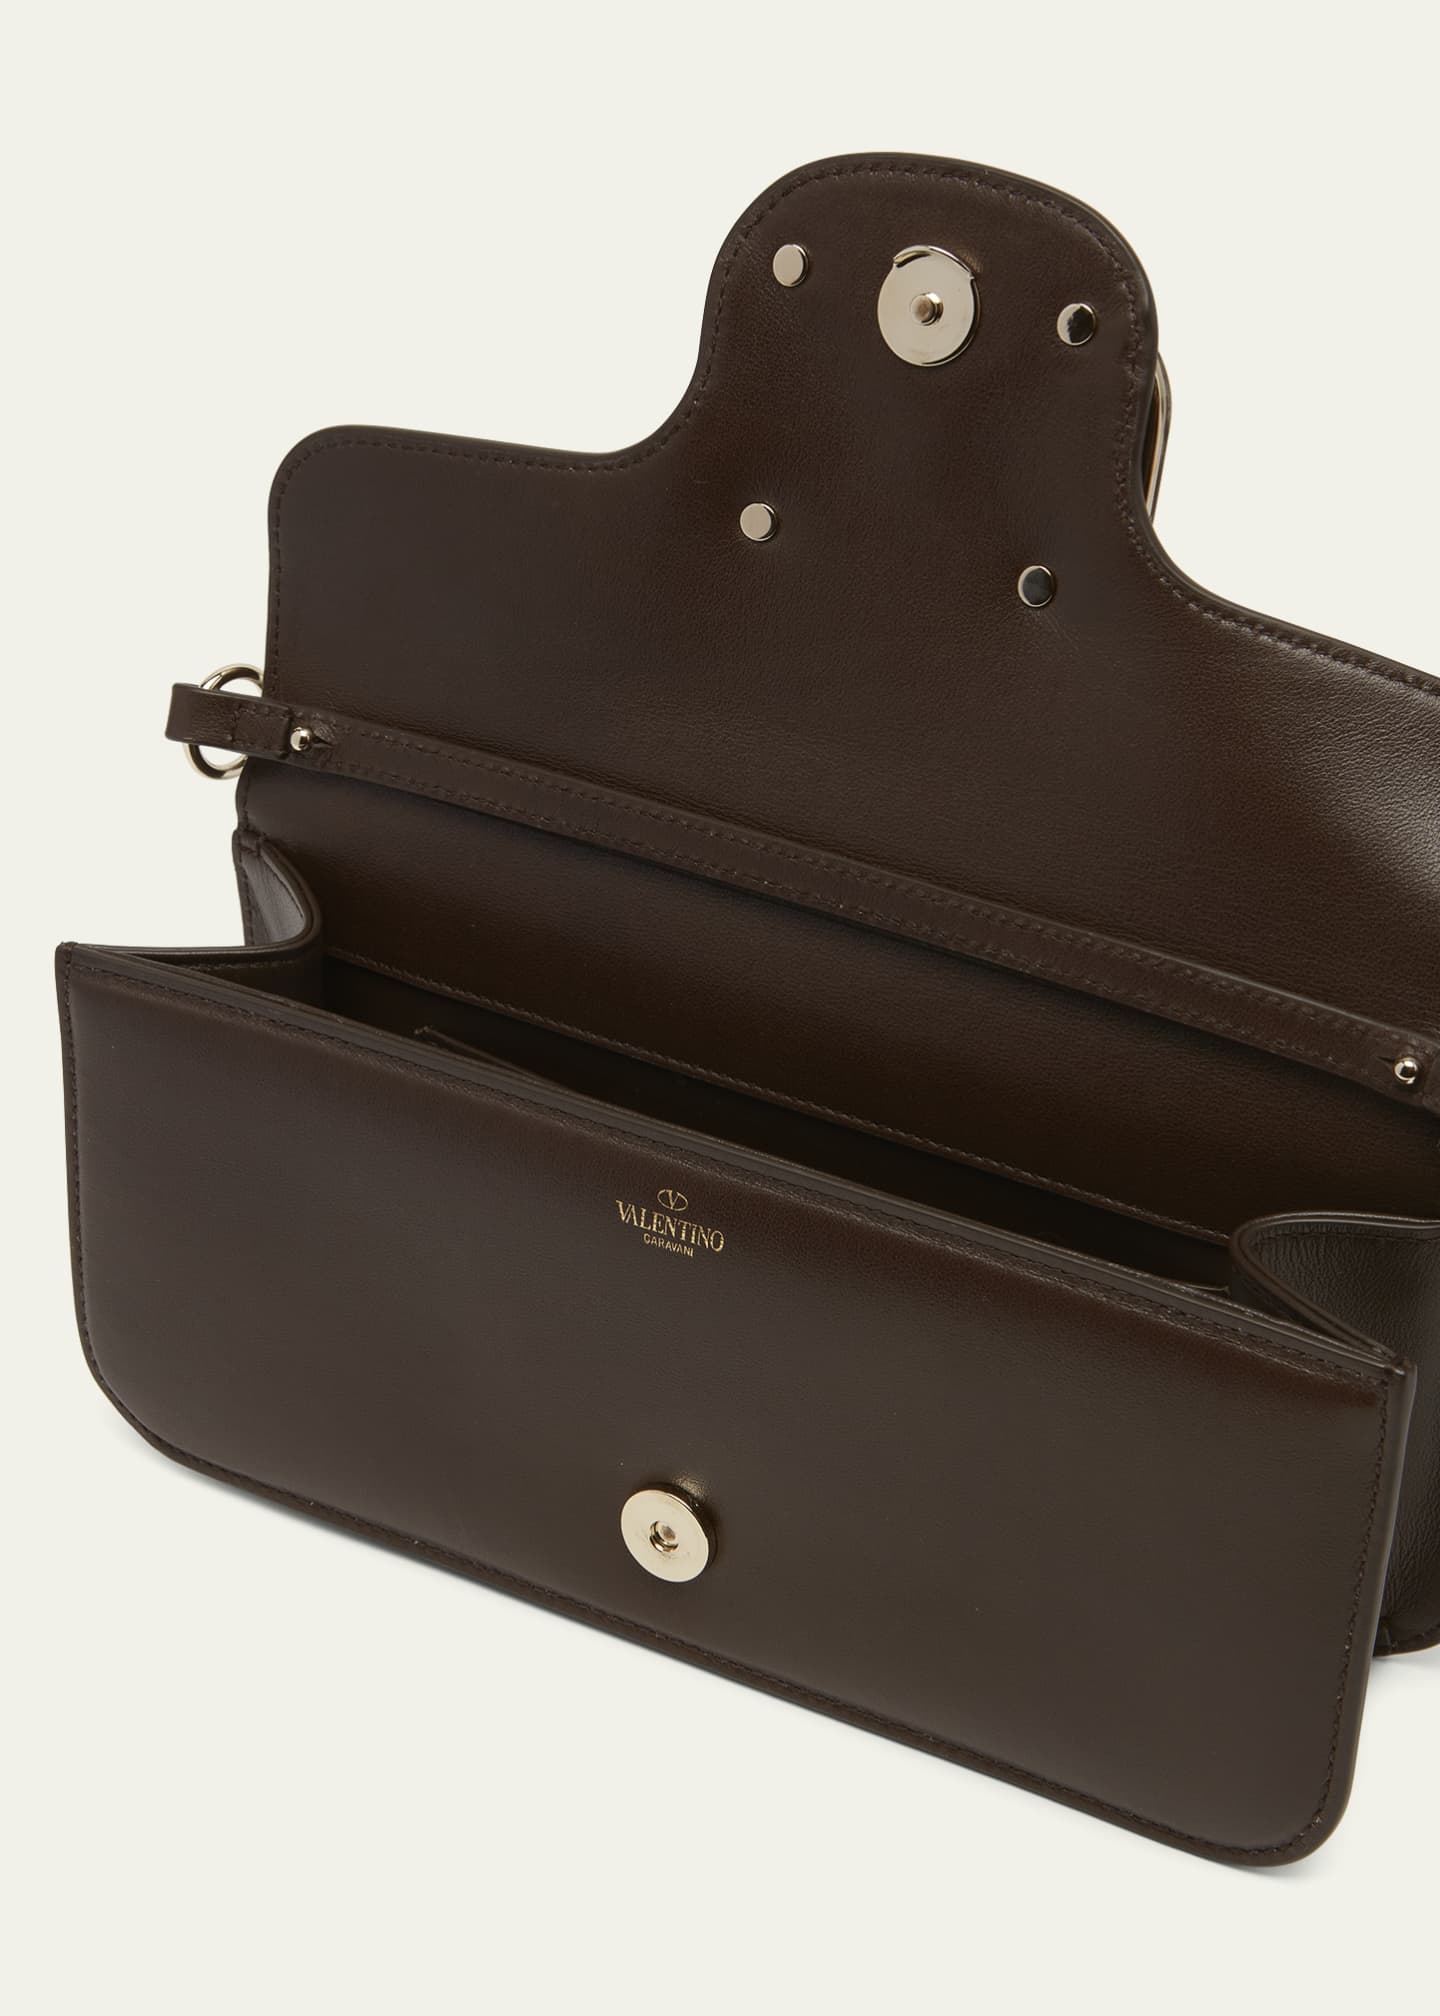 Valentino Garavani Loco Mini Vlogo Leather Top-Handle Bag